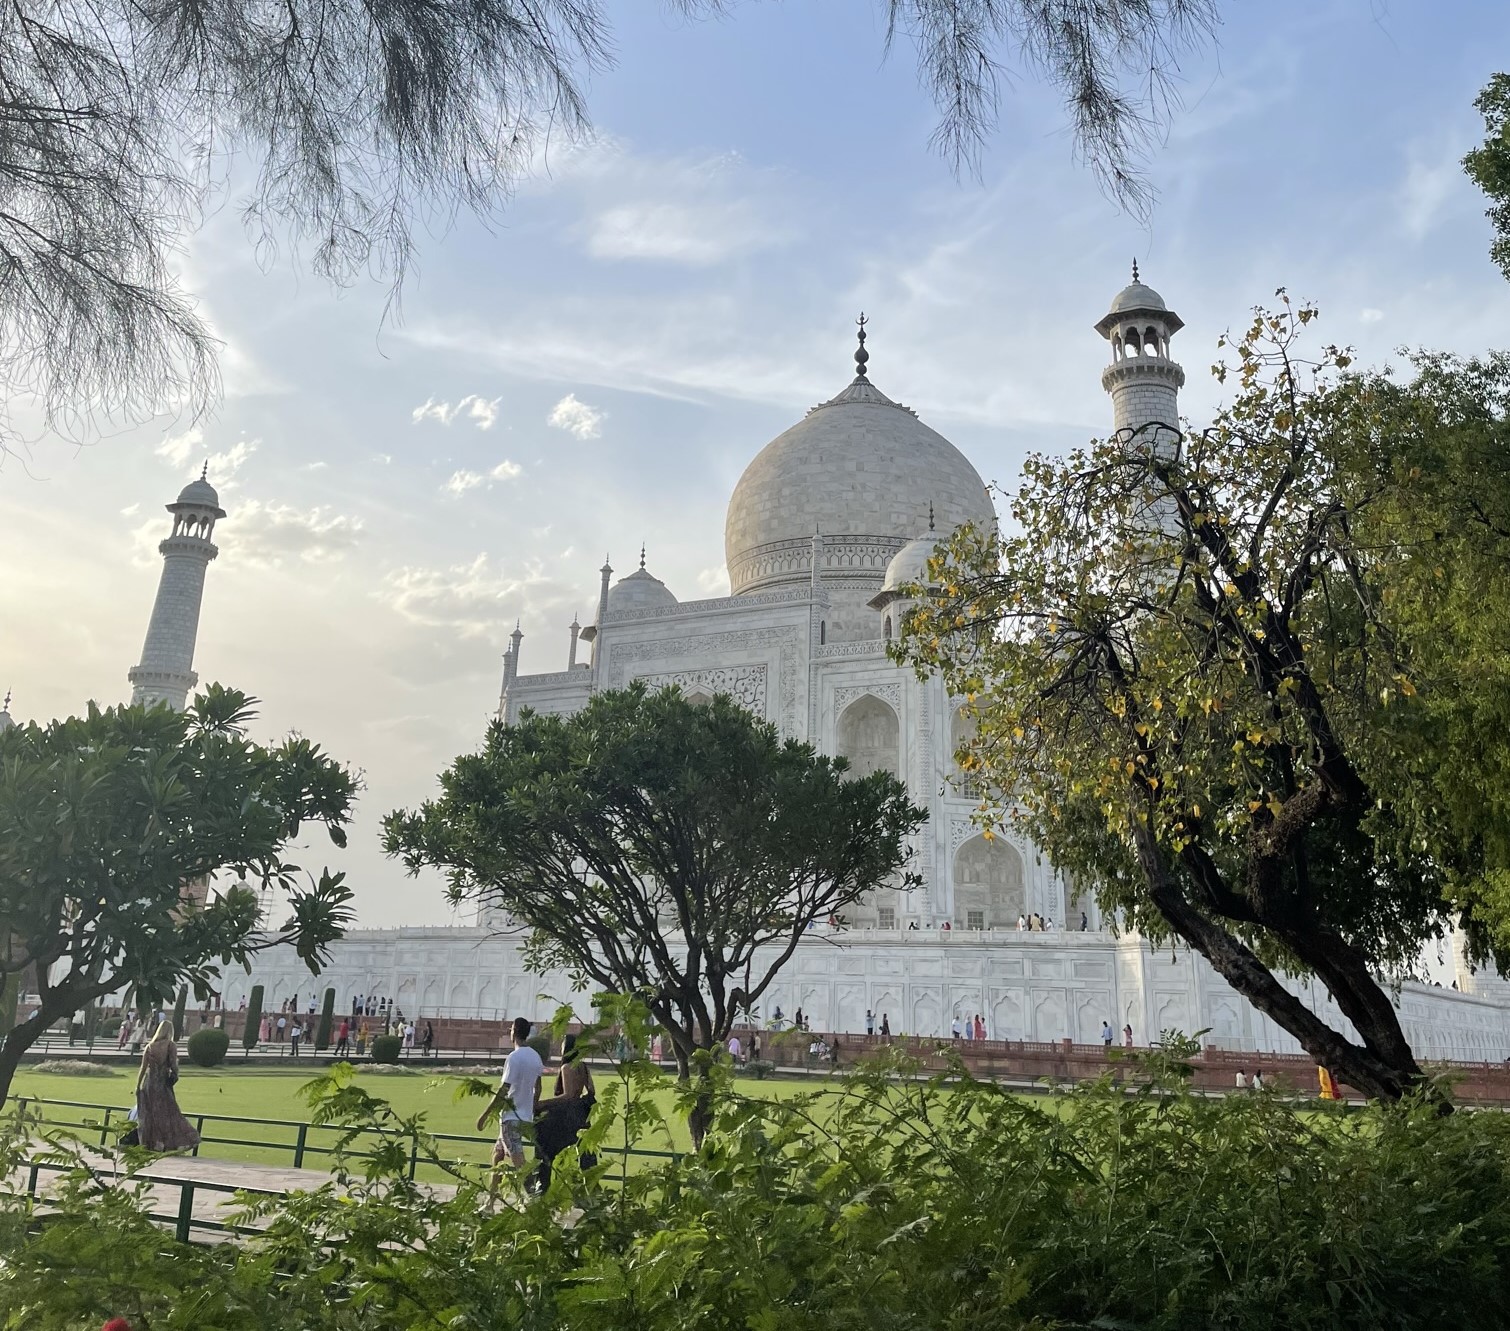 The Taj Mahal Restaurant - Chefs Testing Menu